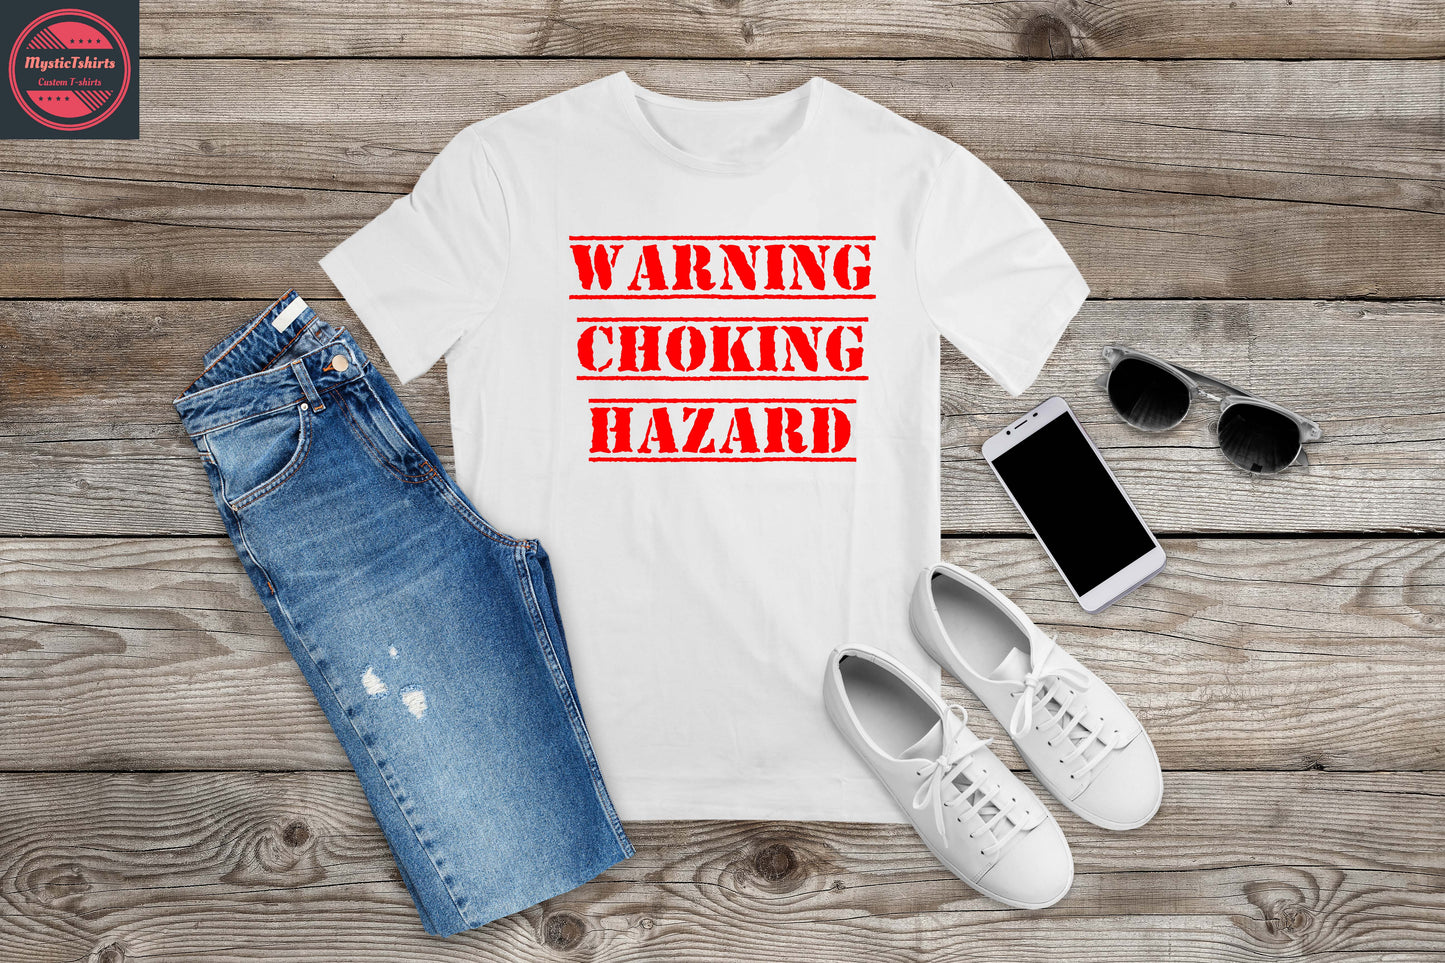 473. WARNING CHOKING HAZARD, Personalized T-Shirt, Custom Text, Make Your Own Shirt, Custom Tee